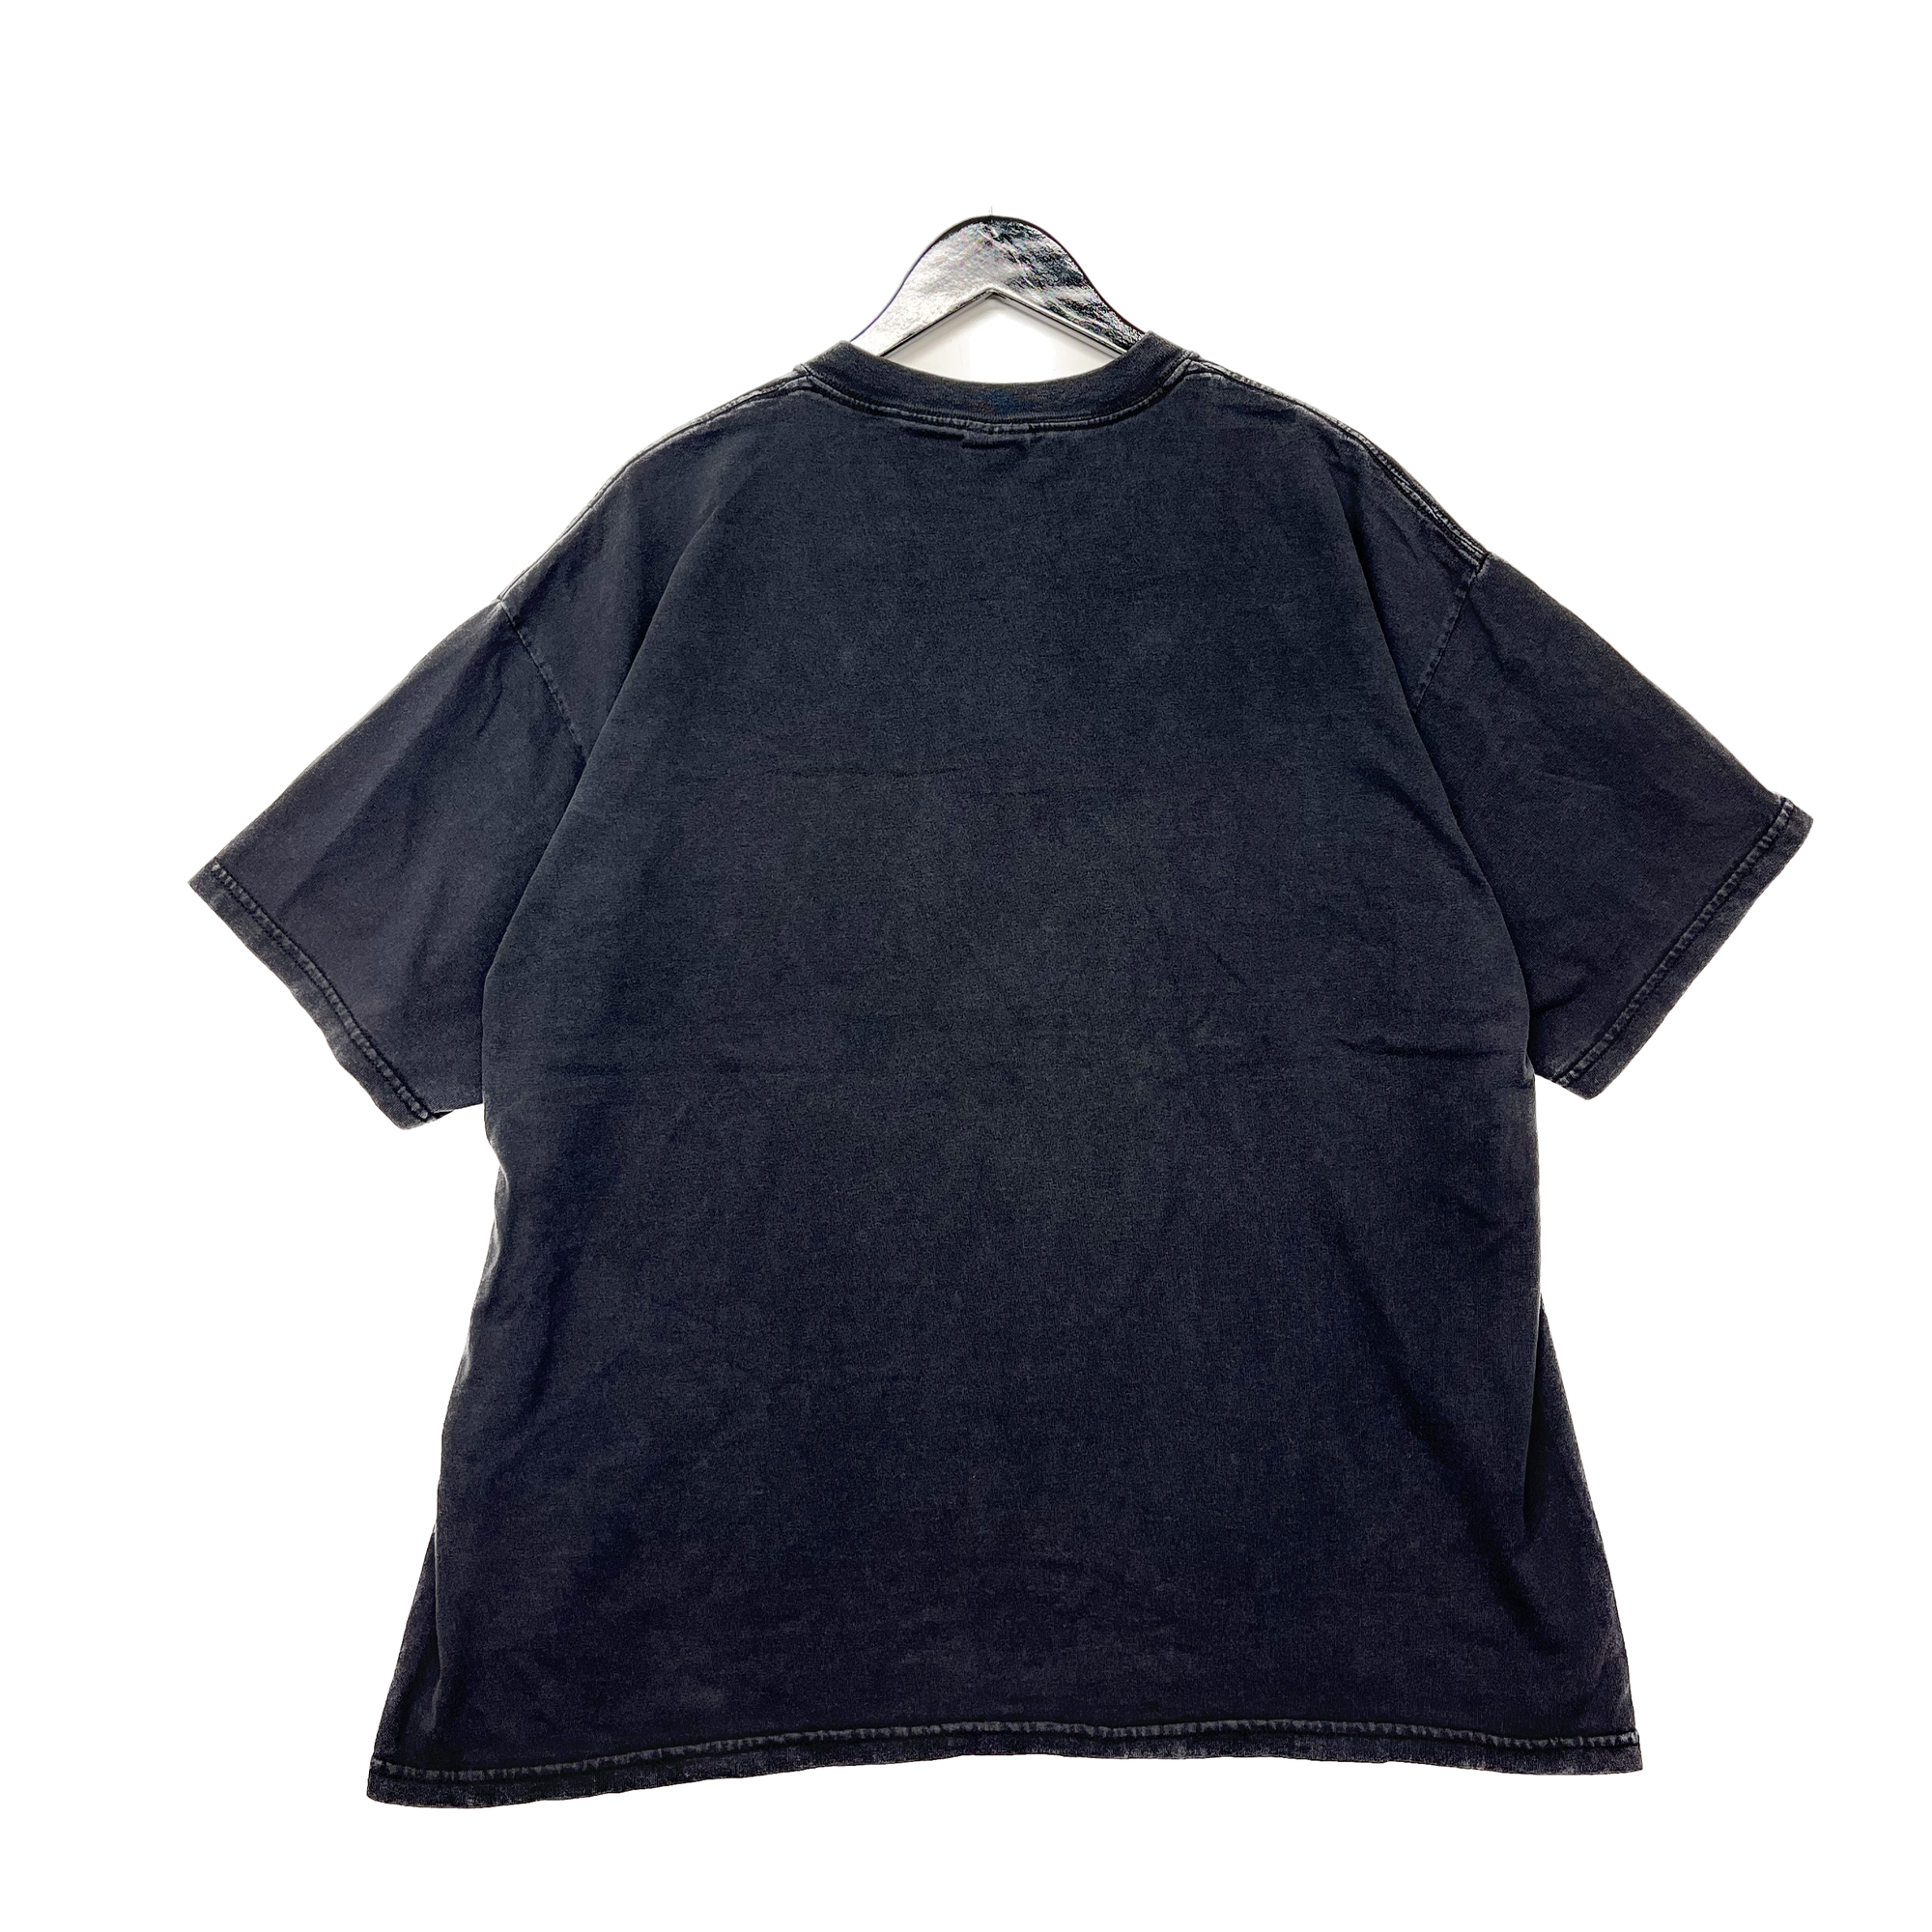 Spawn T-shirt Size XL